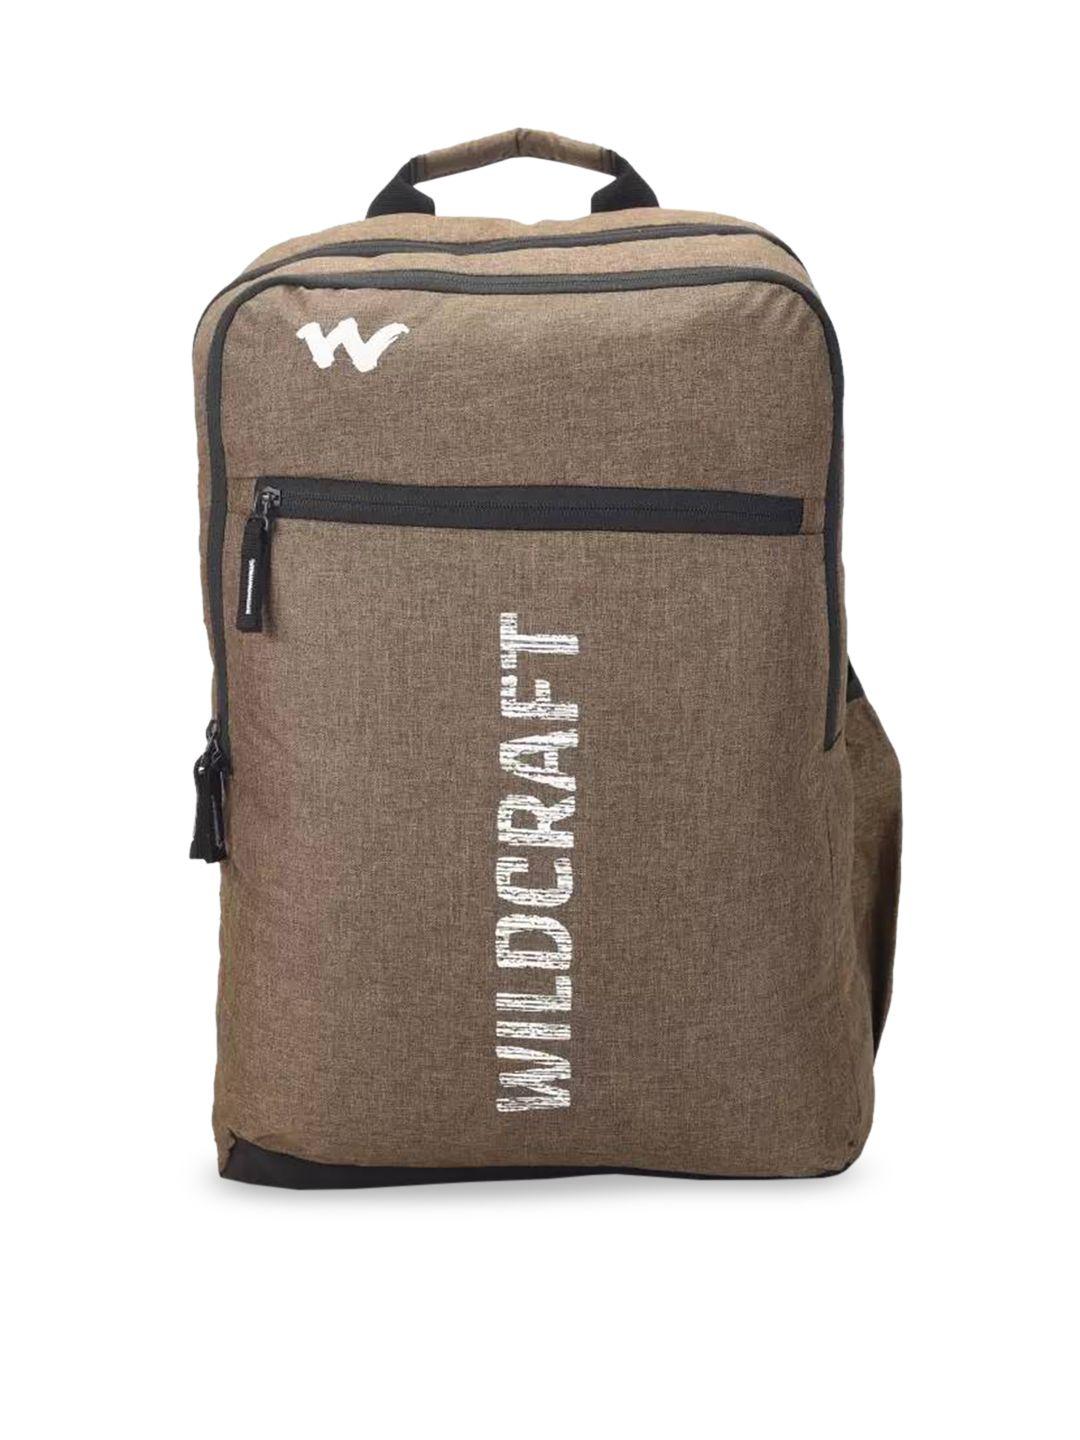 wildcraft unisex khaki & white brand logo backpack